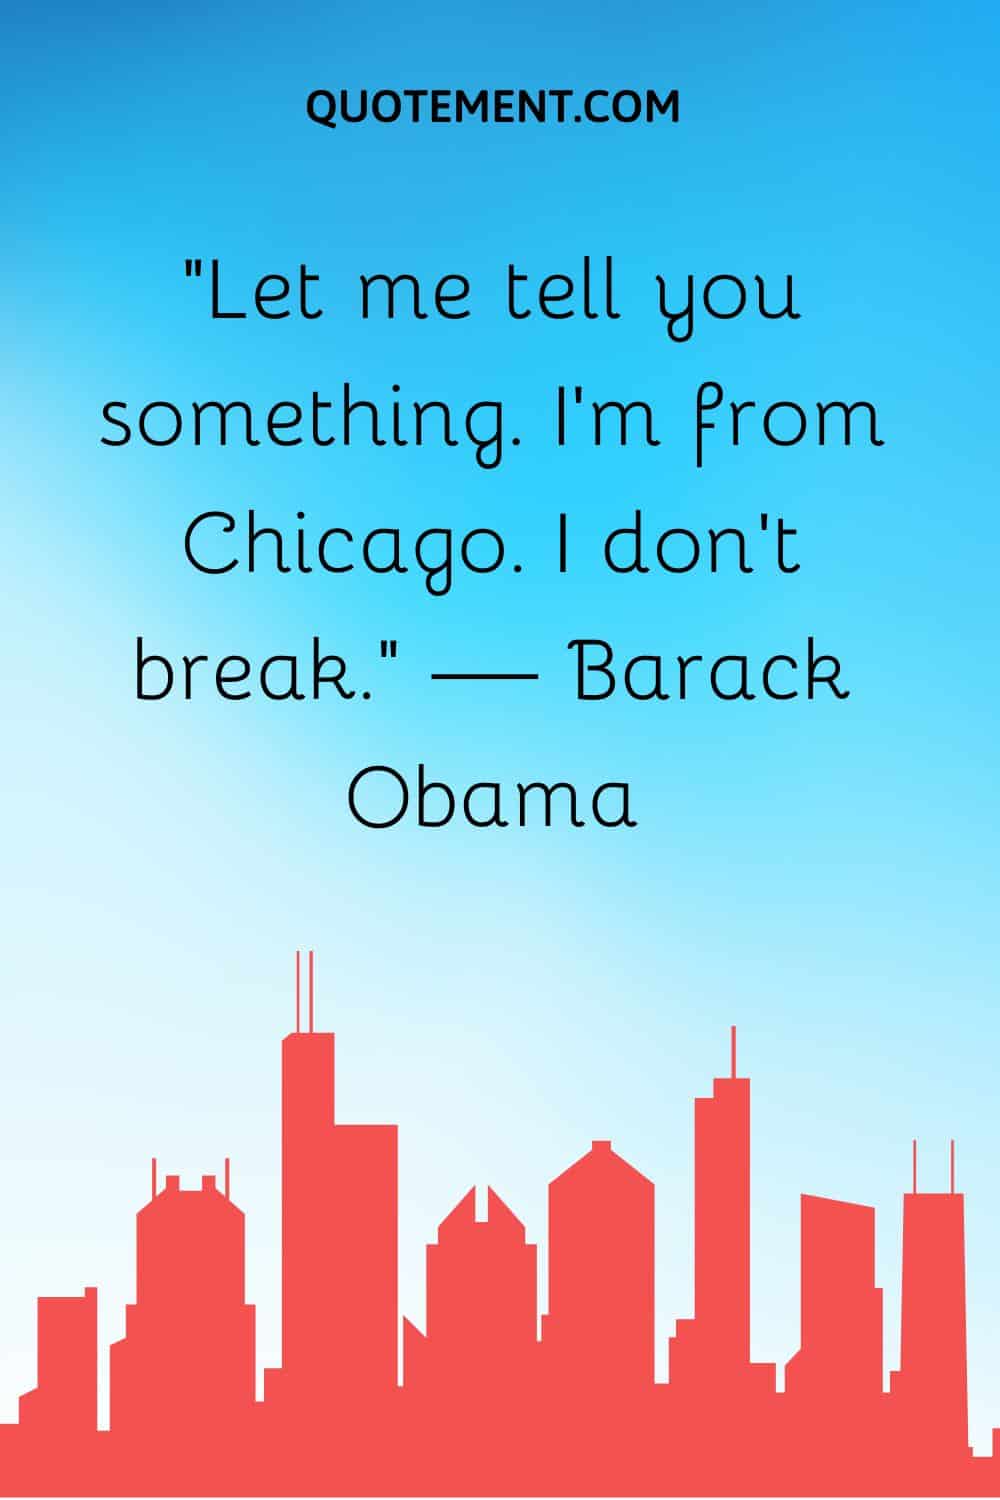 “Let me tell you something. I’m from Chicago. I don’t break.” — Barack Obama